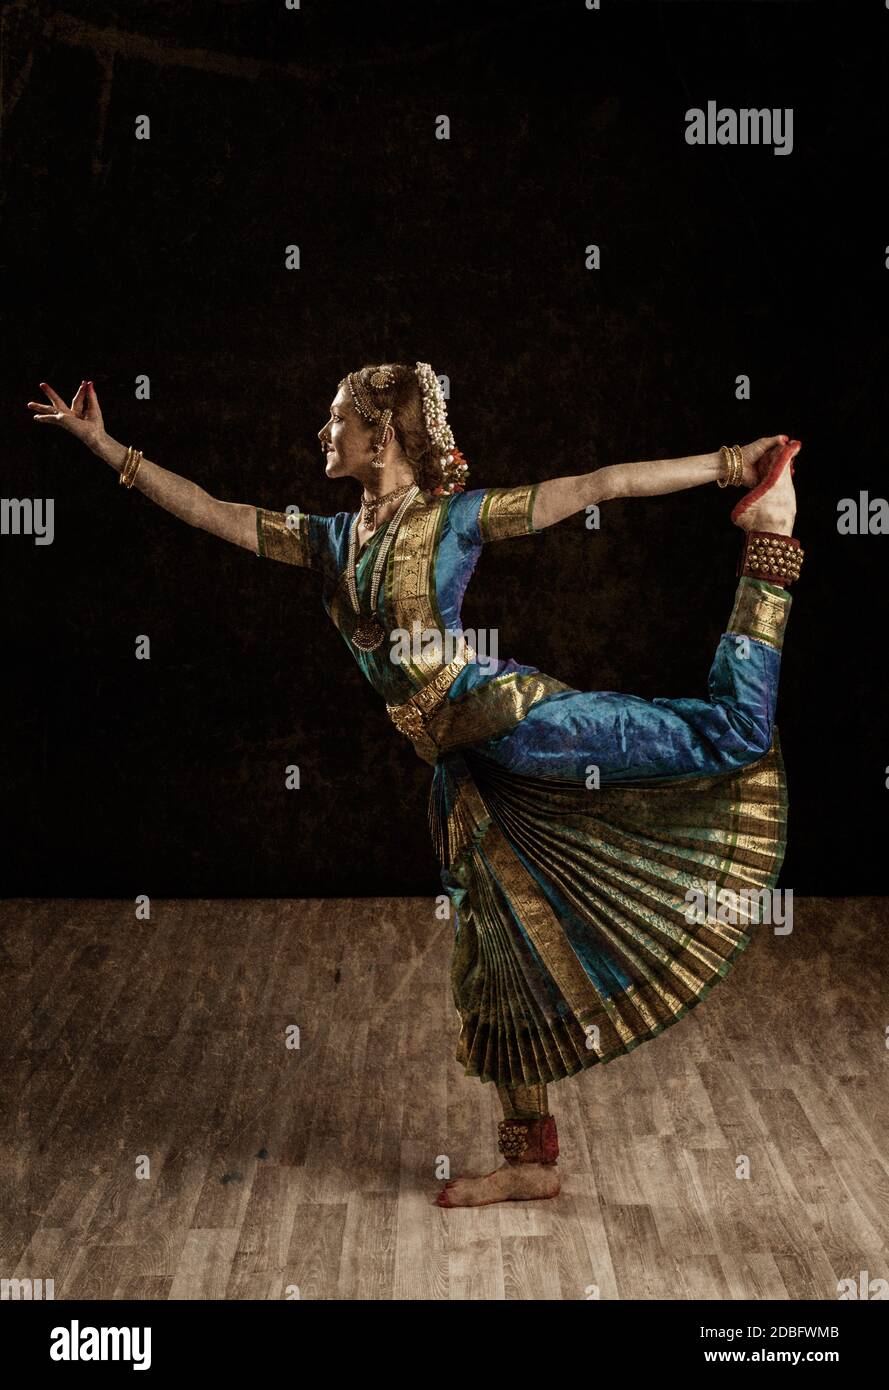 Beautiful dance | Bharatanatyam poses, Indian classical dance, Dance of  india